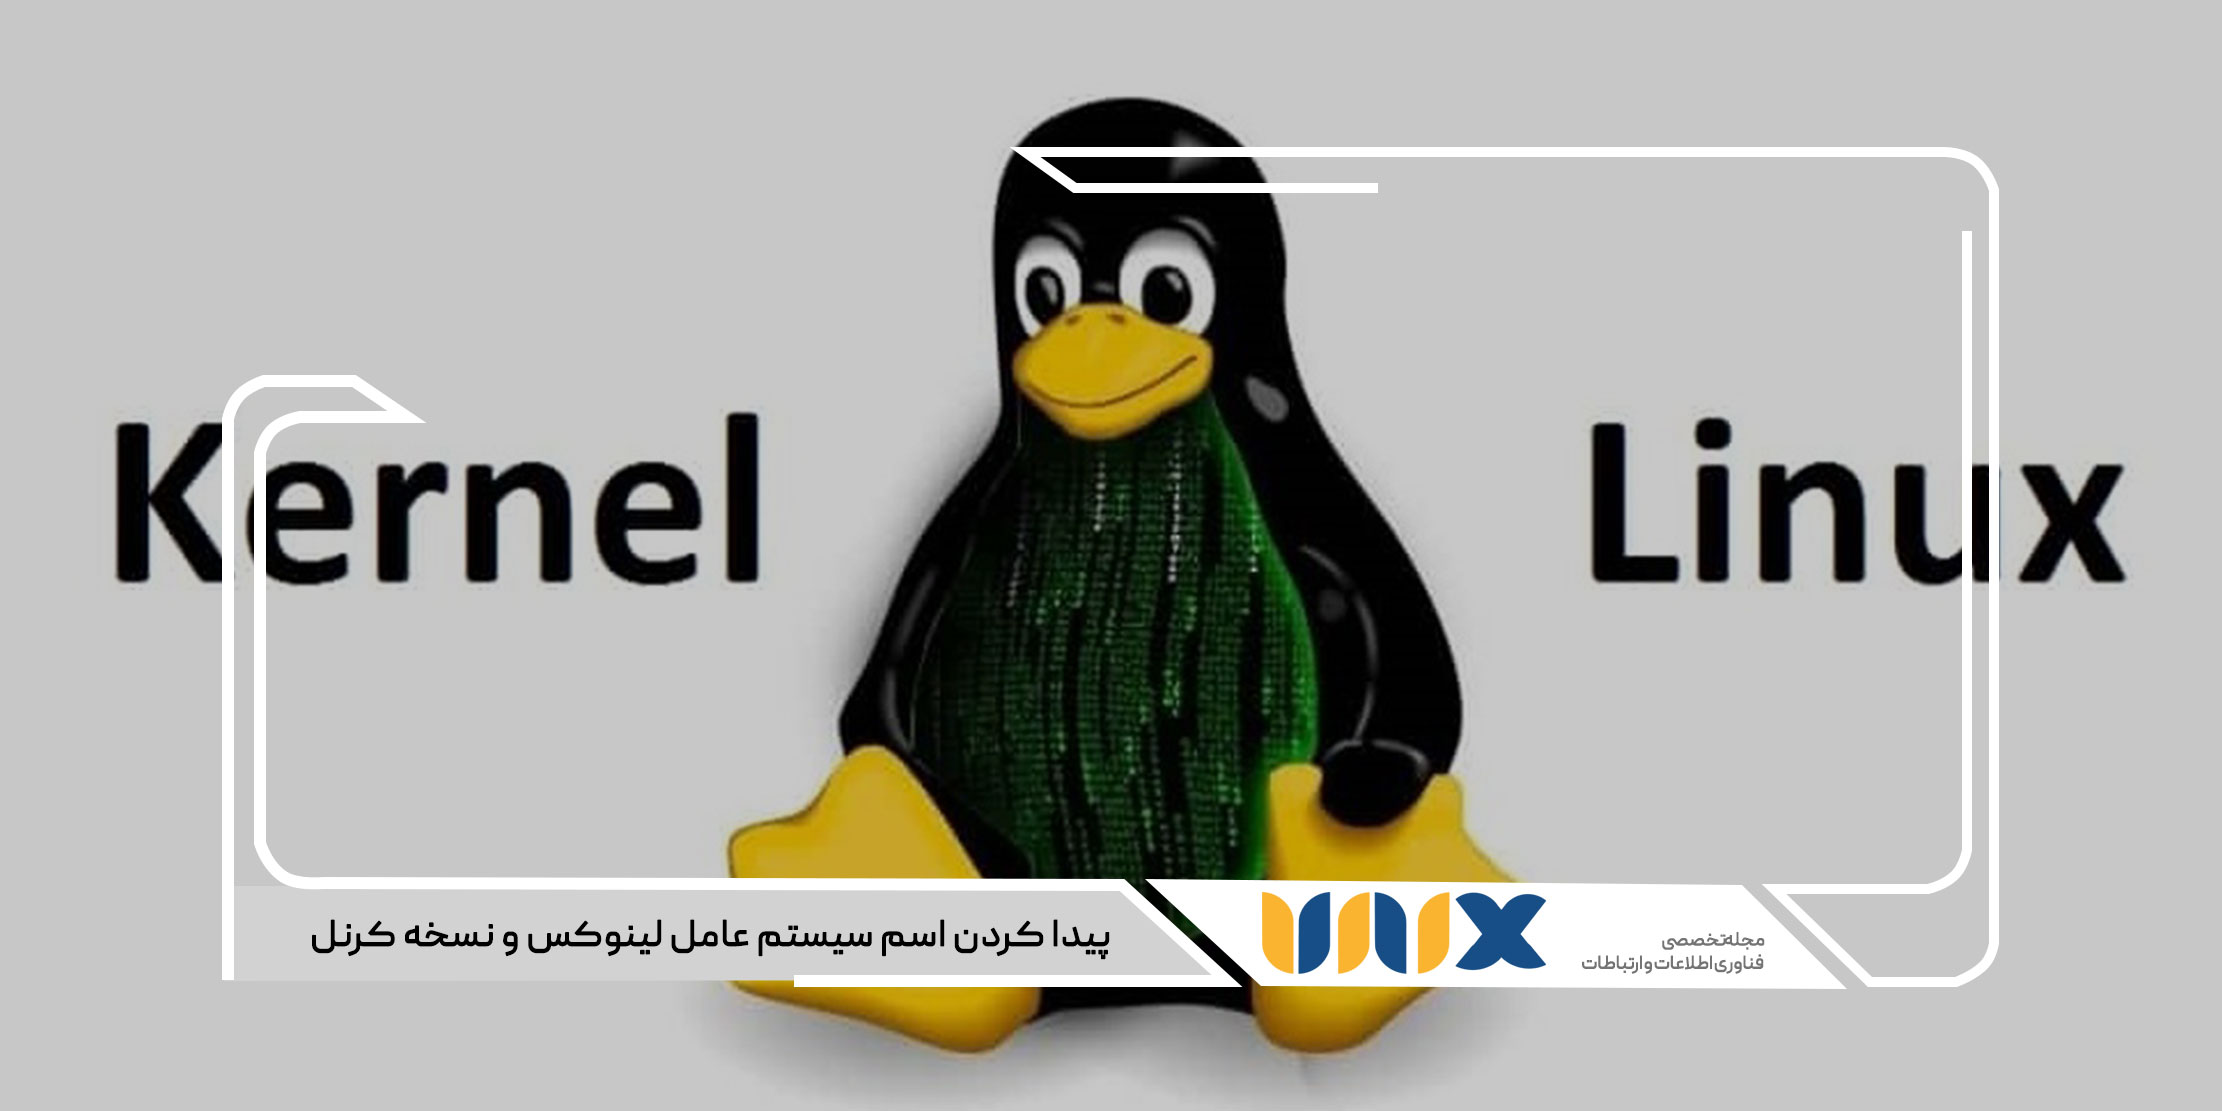 پیدا کردن اسم سیستم عامل لینوکس و نسخه کرنل